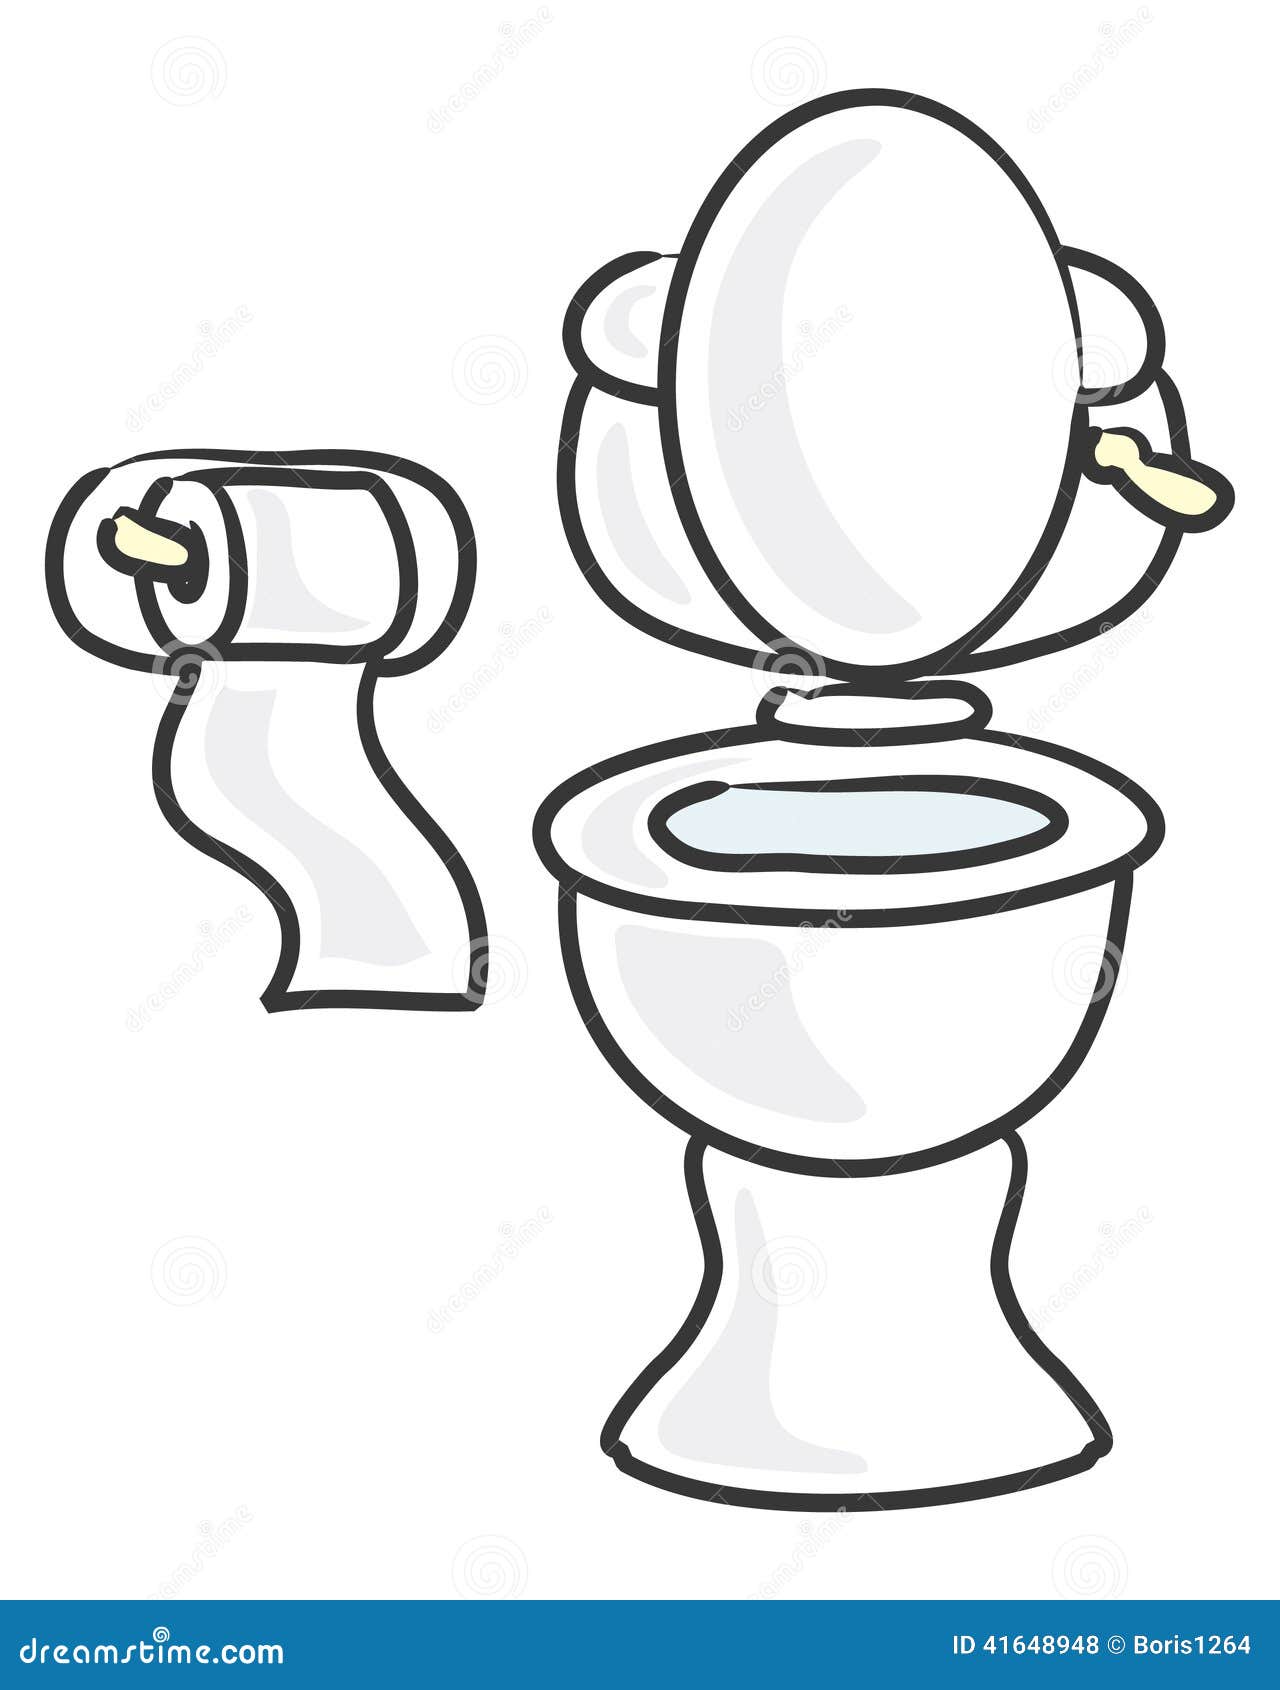 toilet cleaner clip art - photo #50